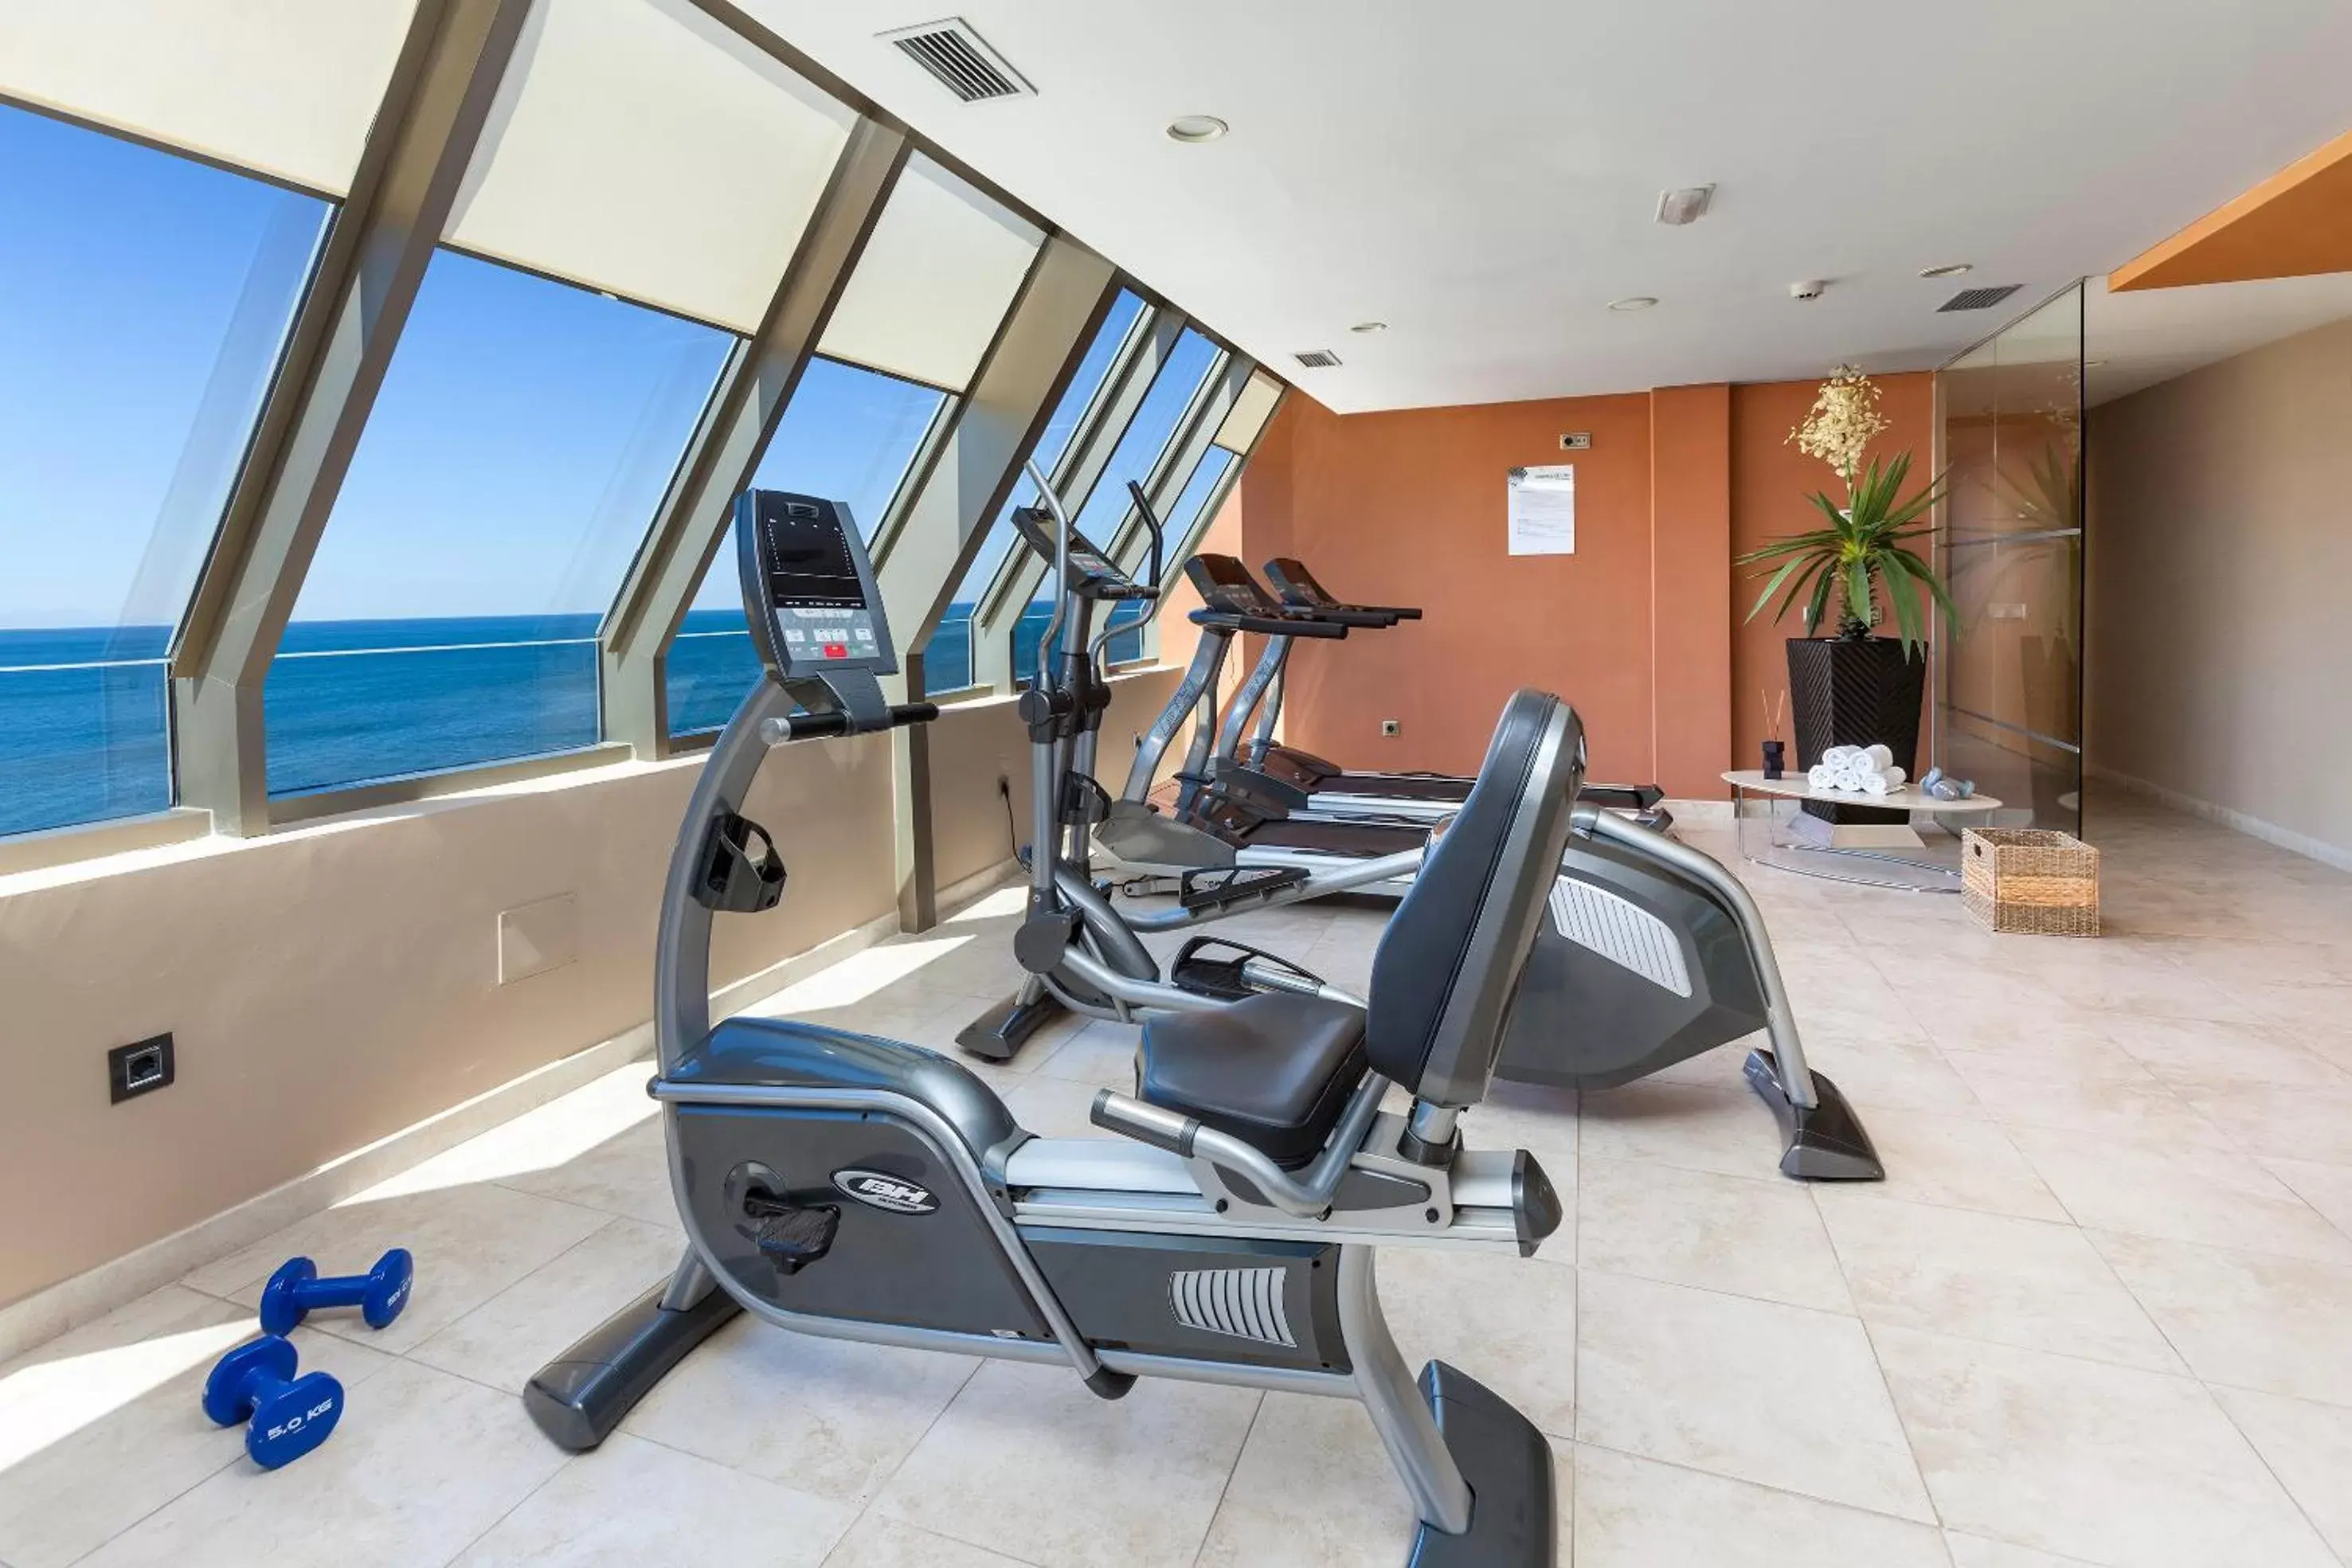 Fitness centre/facilities, Fitness Center/Facilities in Sol Costa Atlantis Tenerife